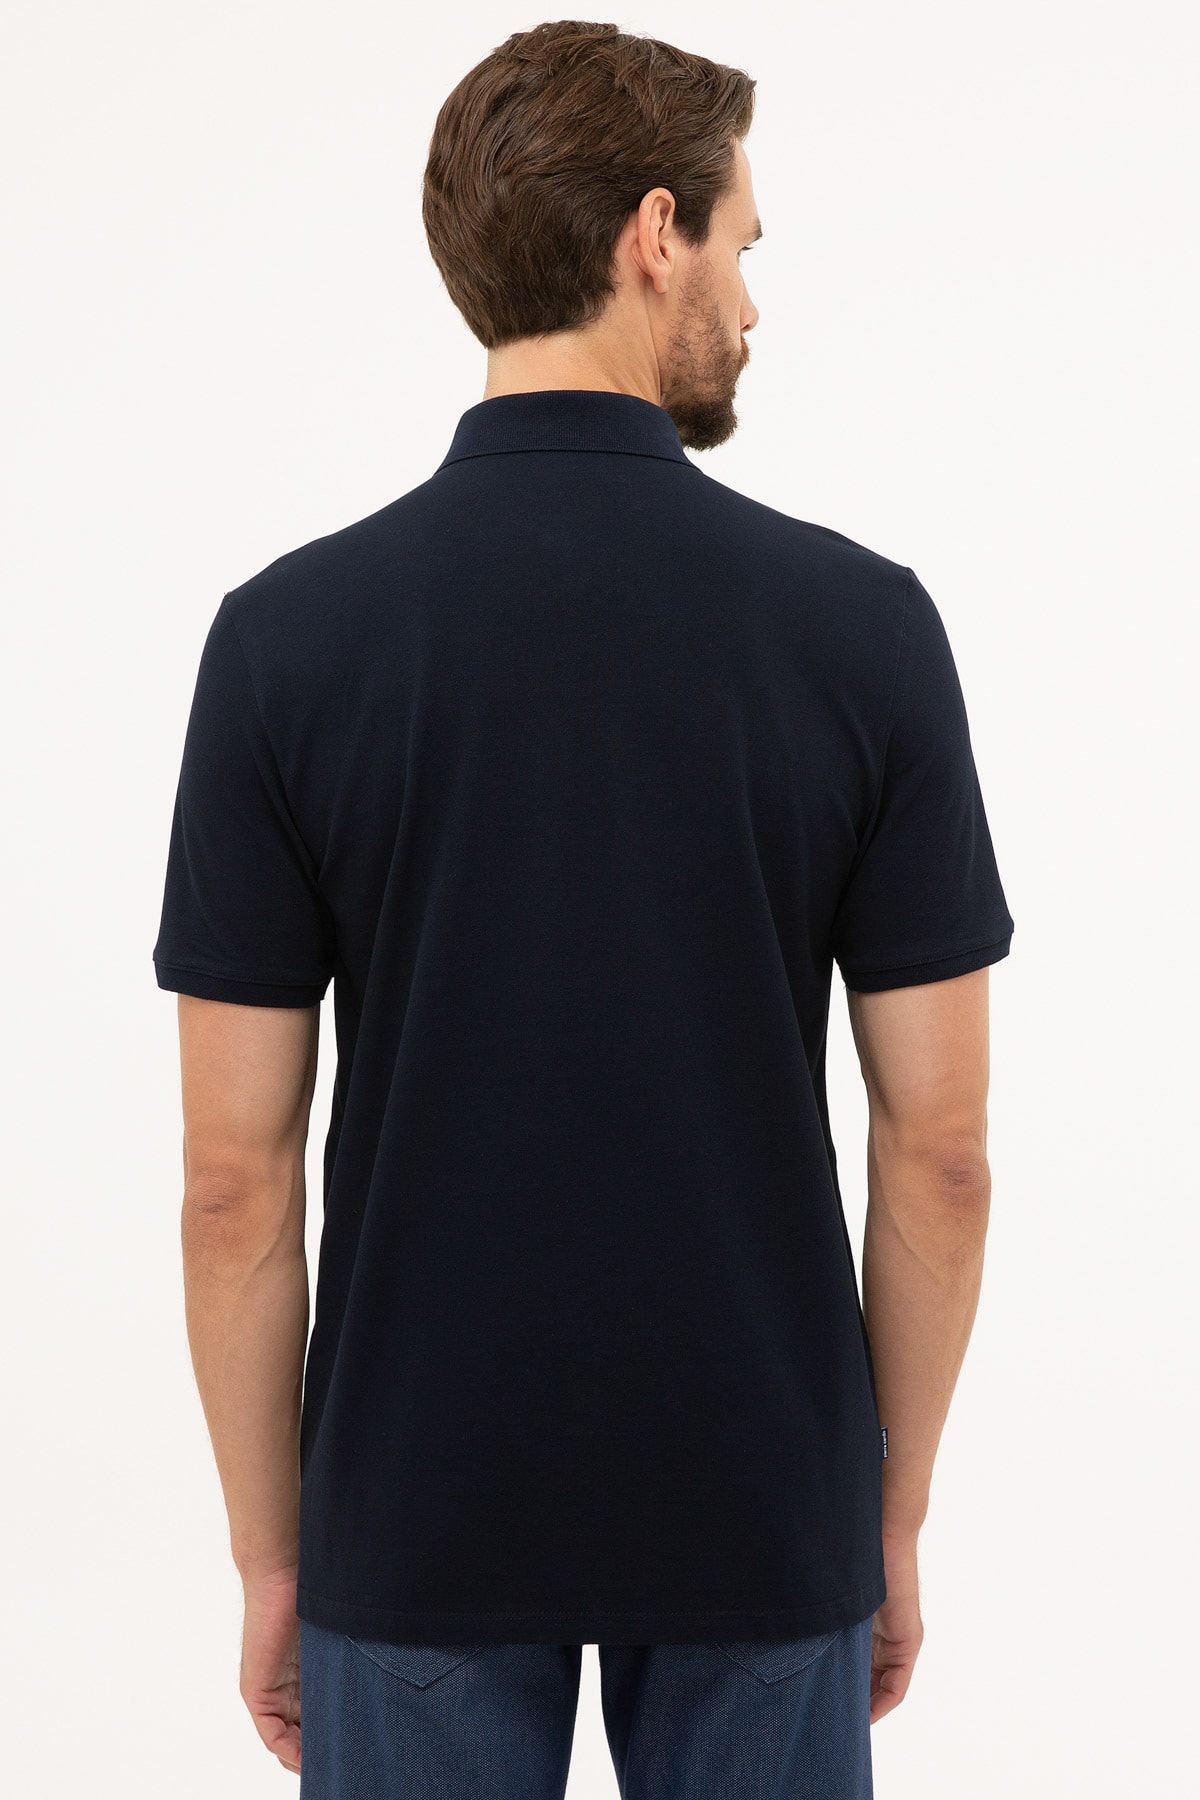 Pierre Cardin تی شرت یقه پولو با تناسب معمولی آبی تیره مردانه